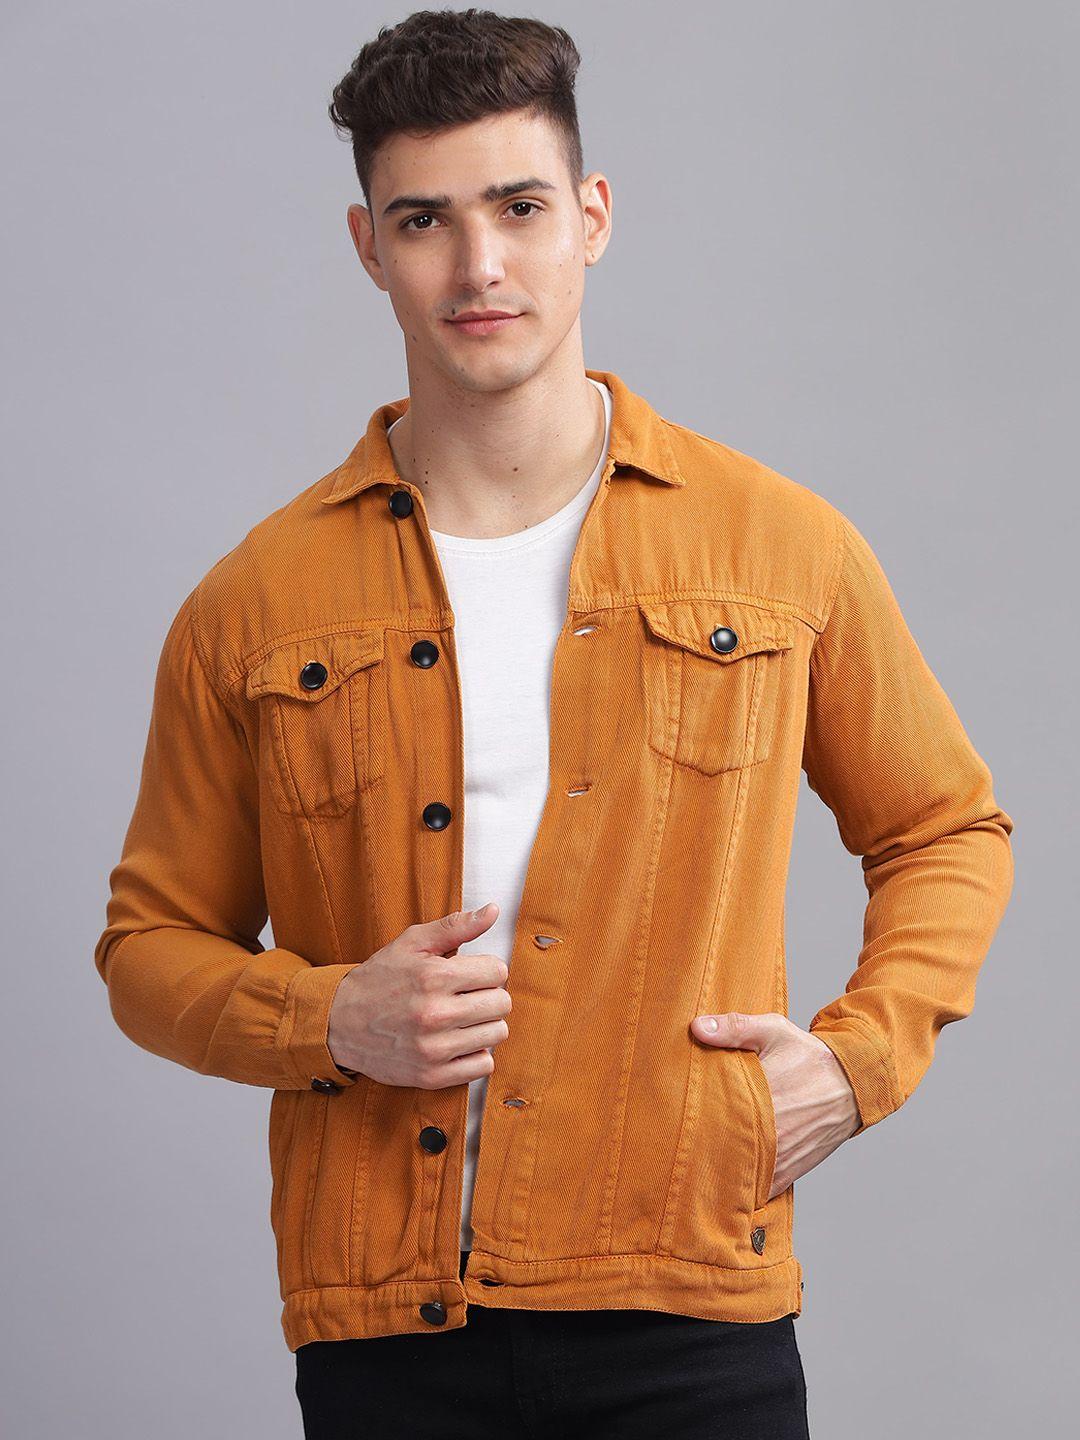 kuons-avenue-spread-collar-long-sleeves-denim-jacket